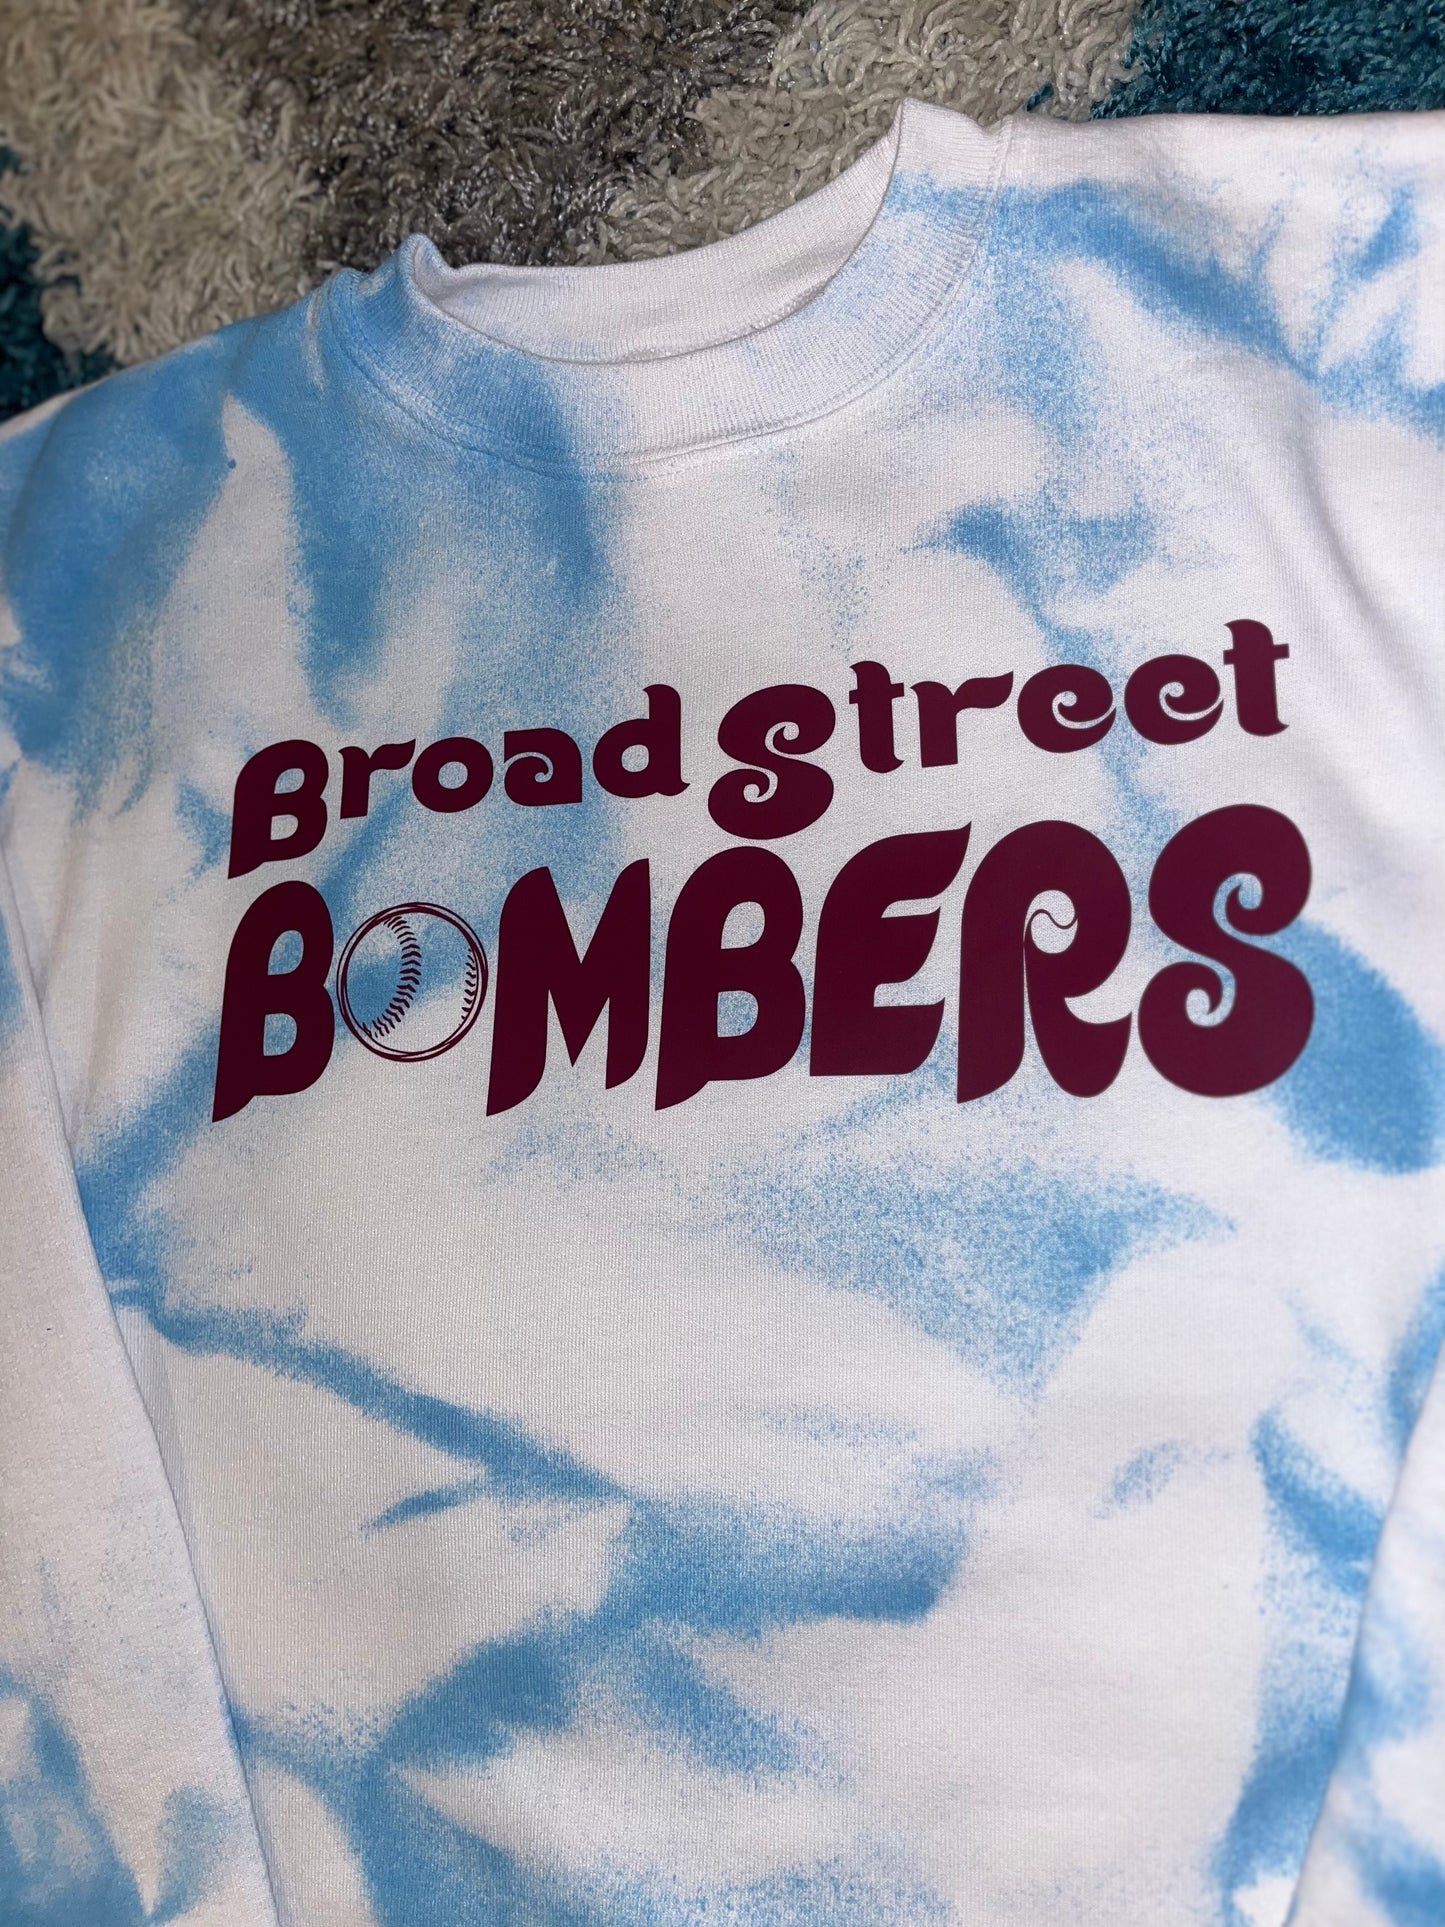 BroadStreetBombers spray dye sweatshirt